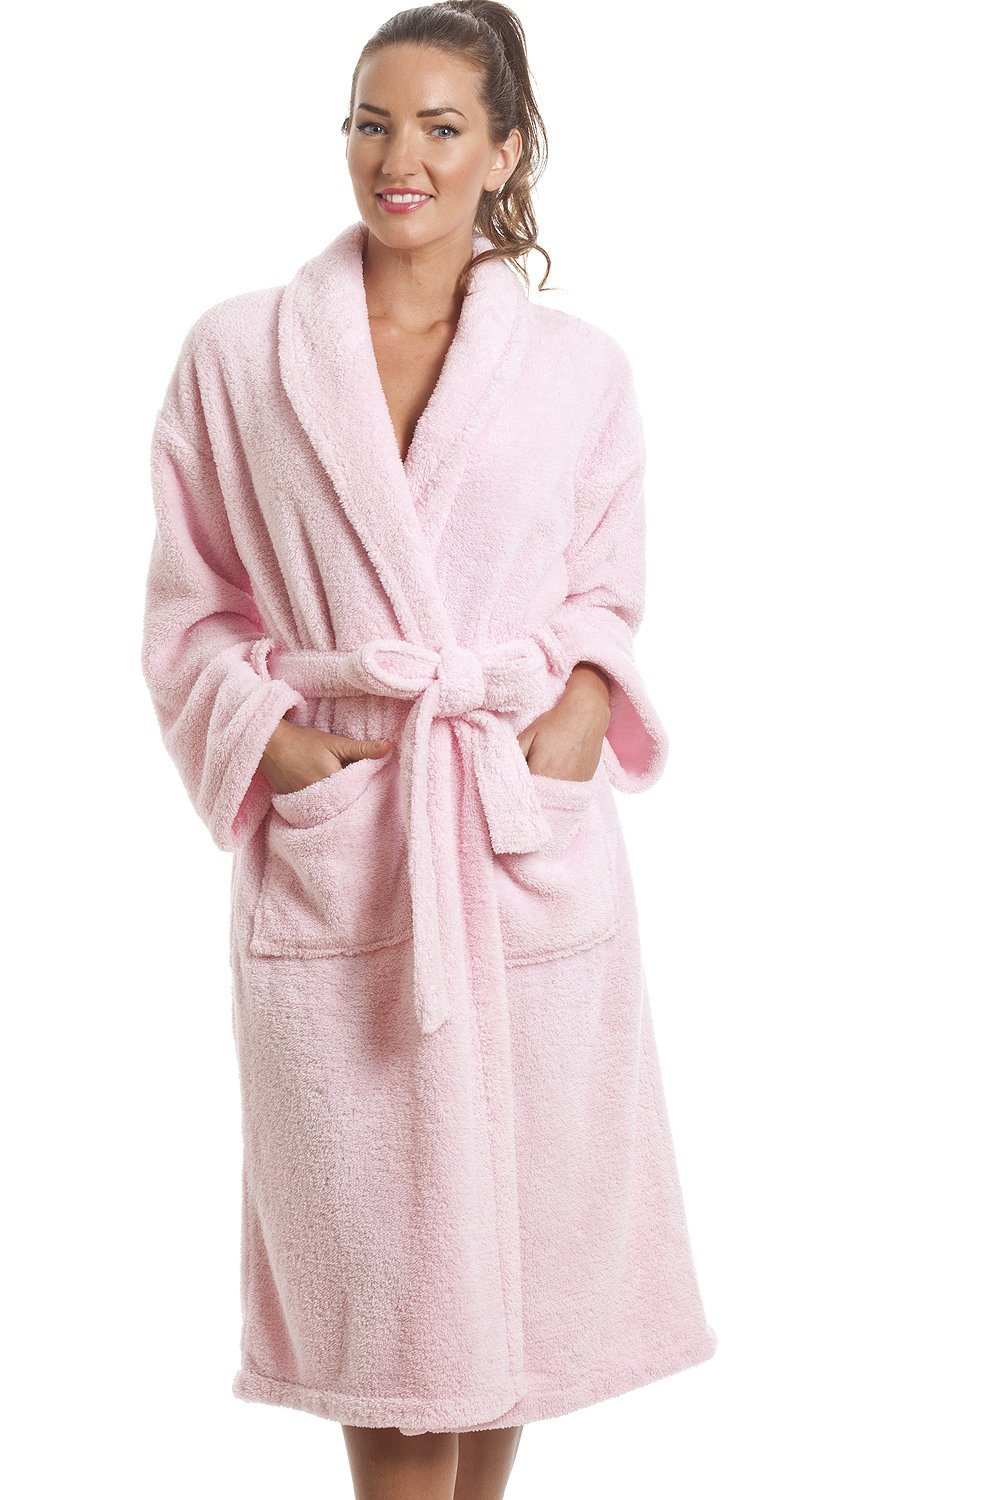 Wholesale Luxury Soft Comfortable Cotton Towel Women's Bathrobe Hotel